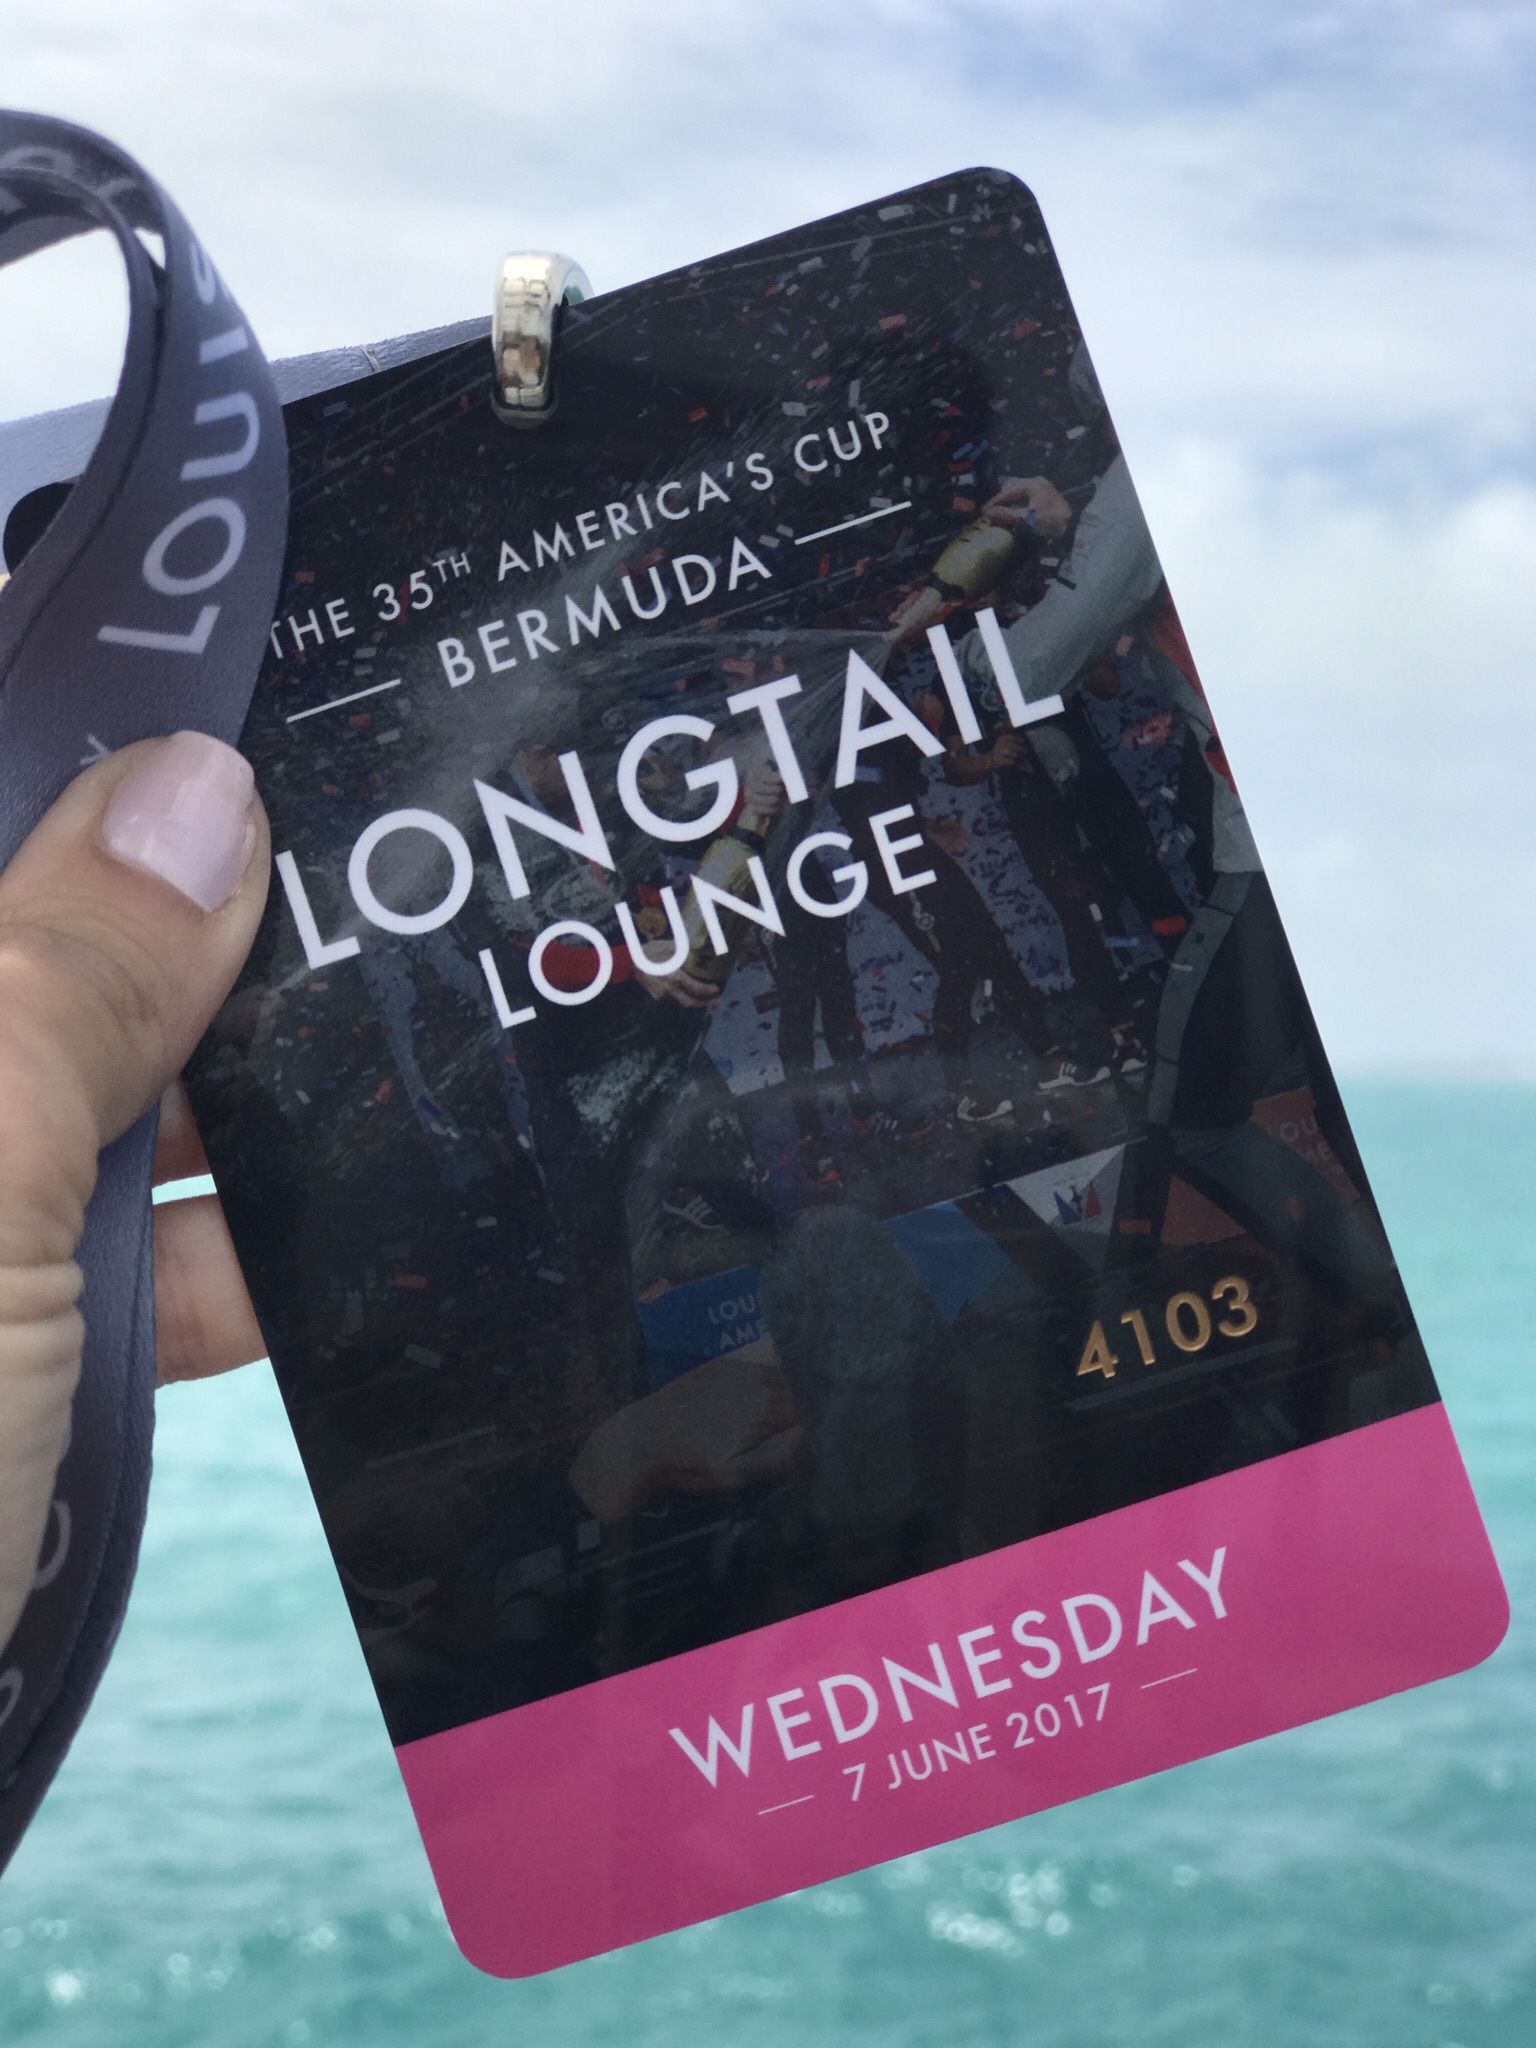 America's Cup Bermuda Longtail Lounge